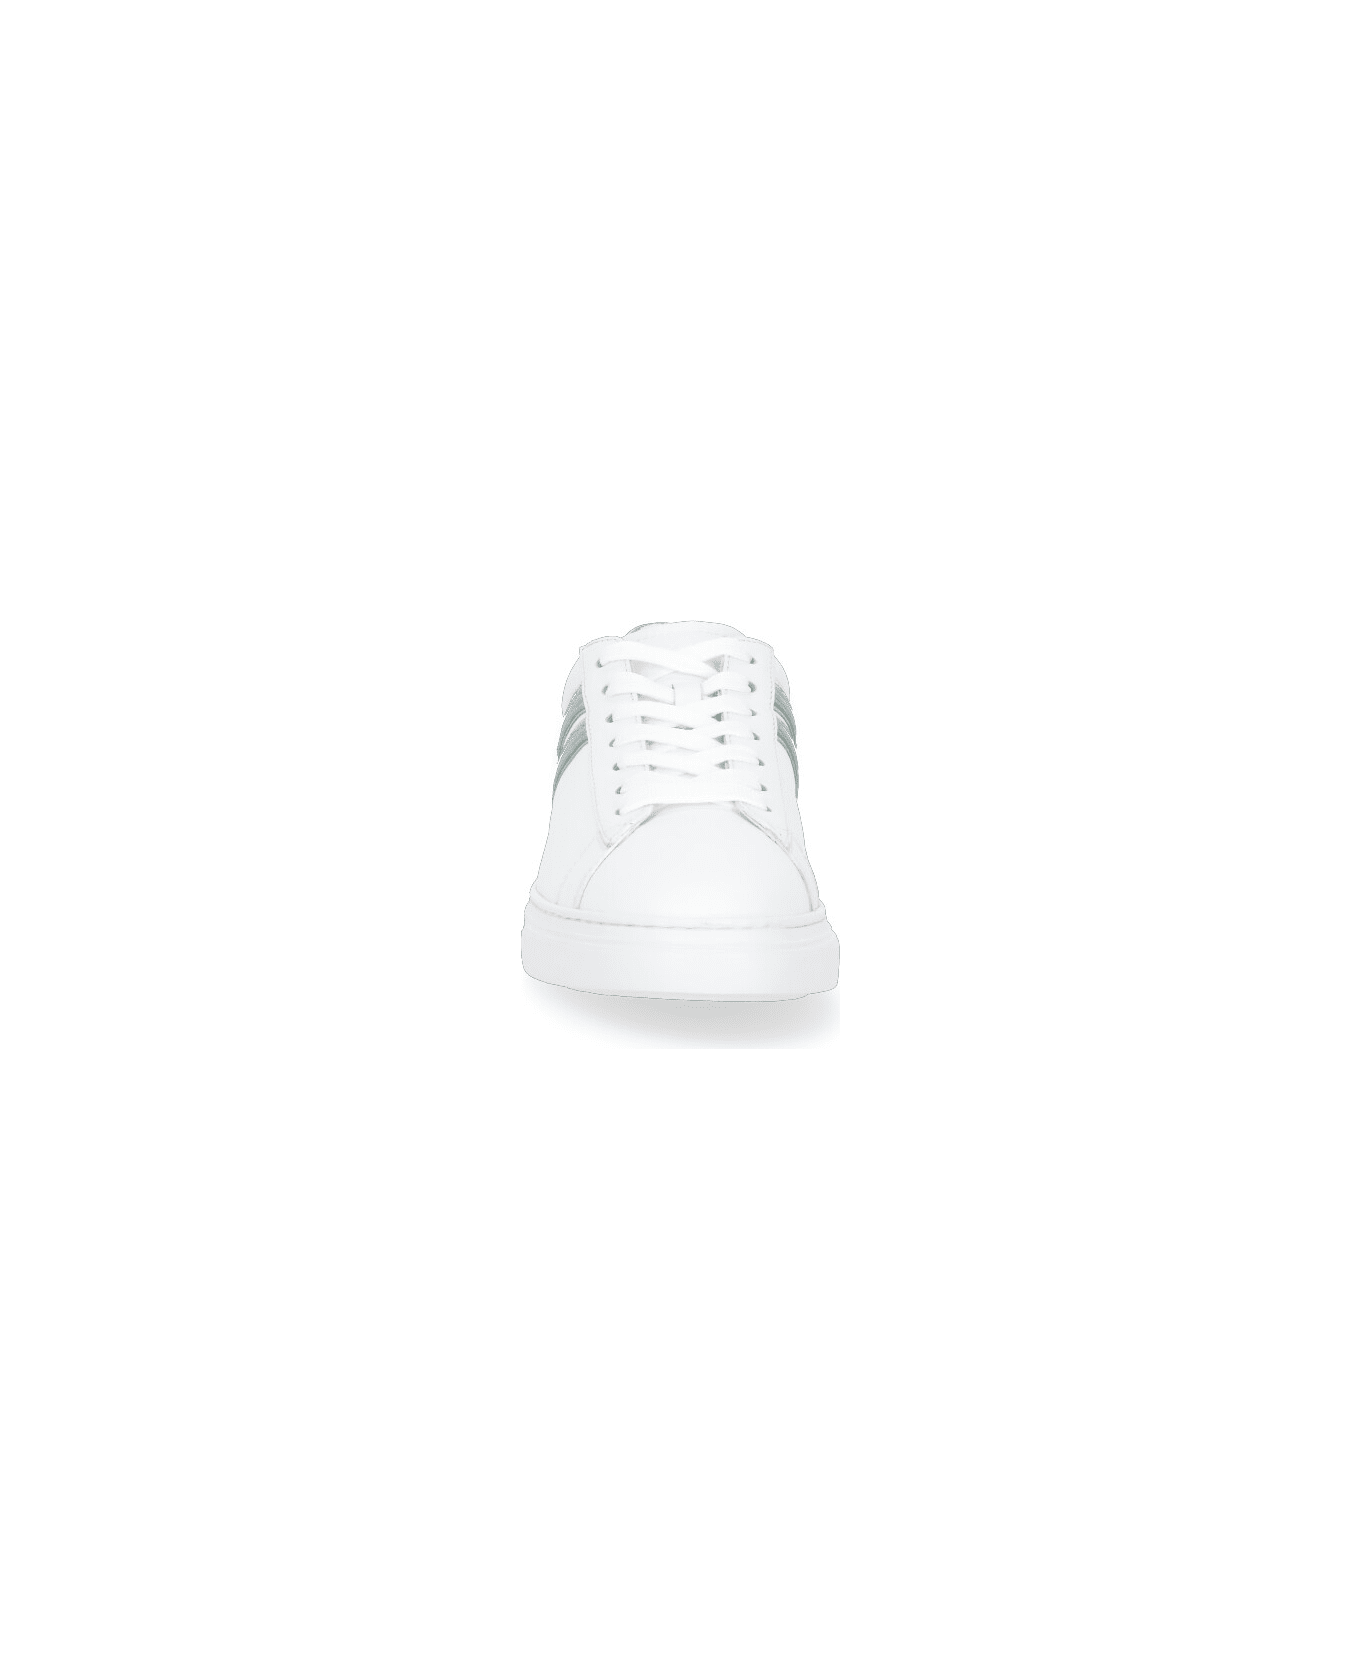 Hogan H365 Sneakers - Green/white